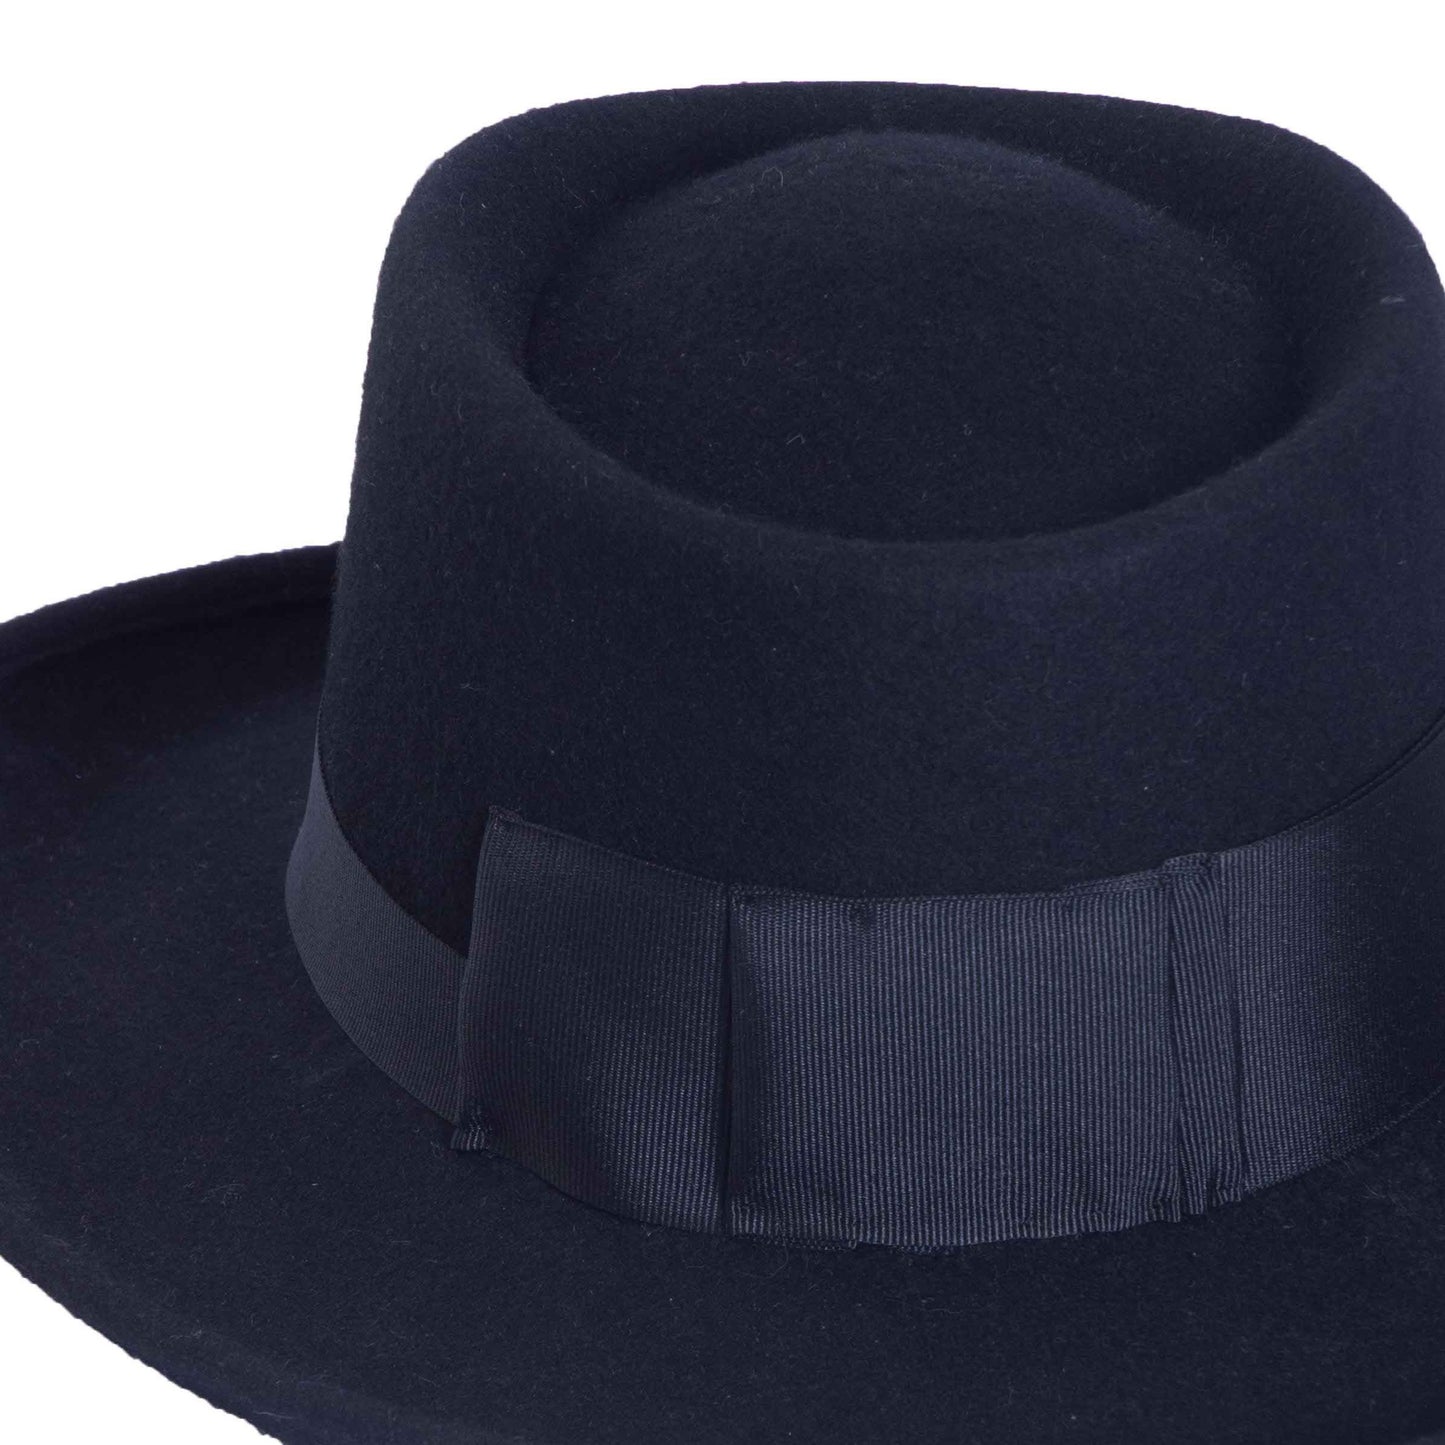 Kenzo, Wool Felt Hat, Black